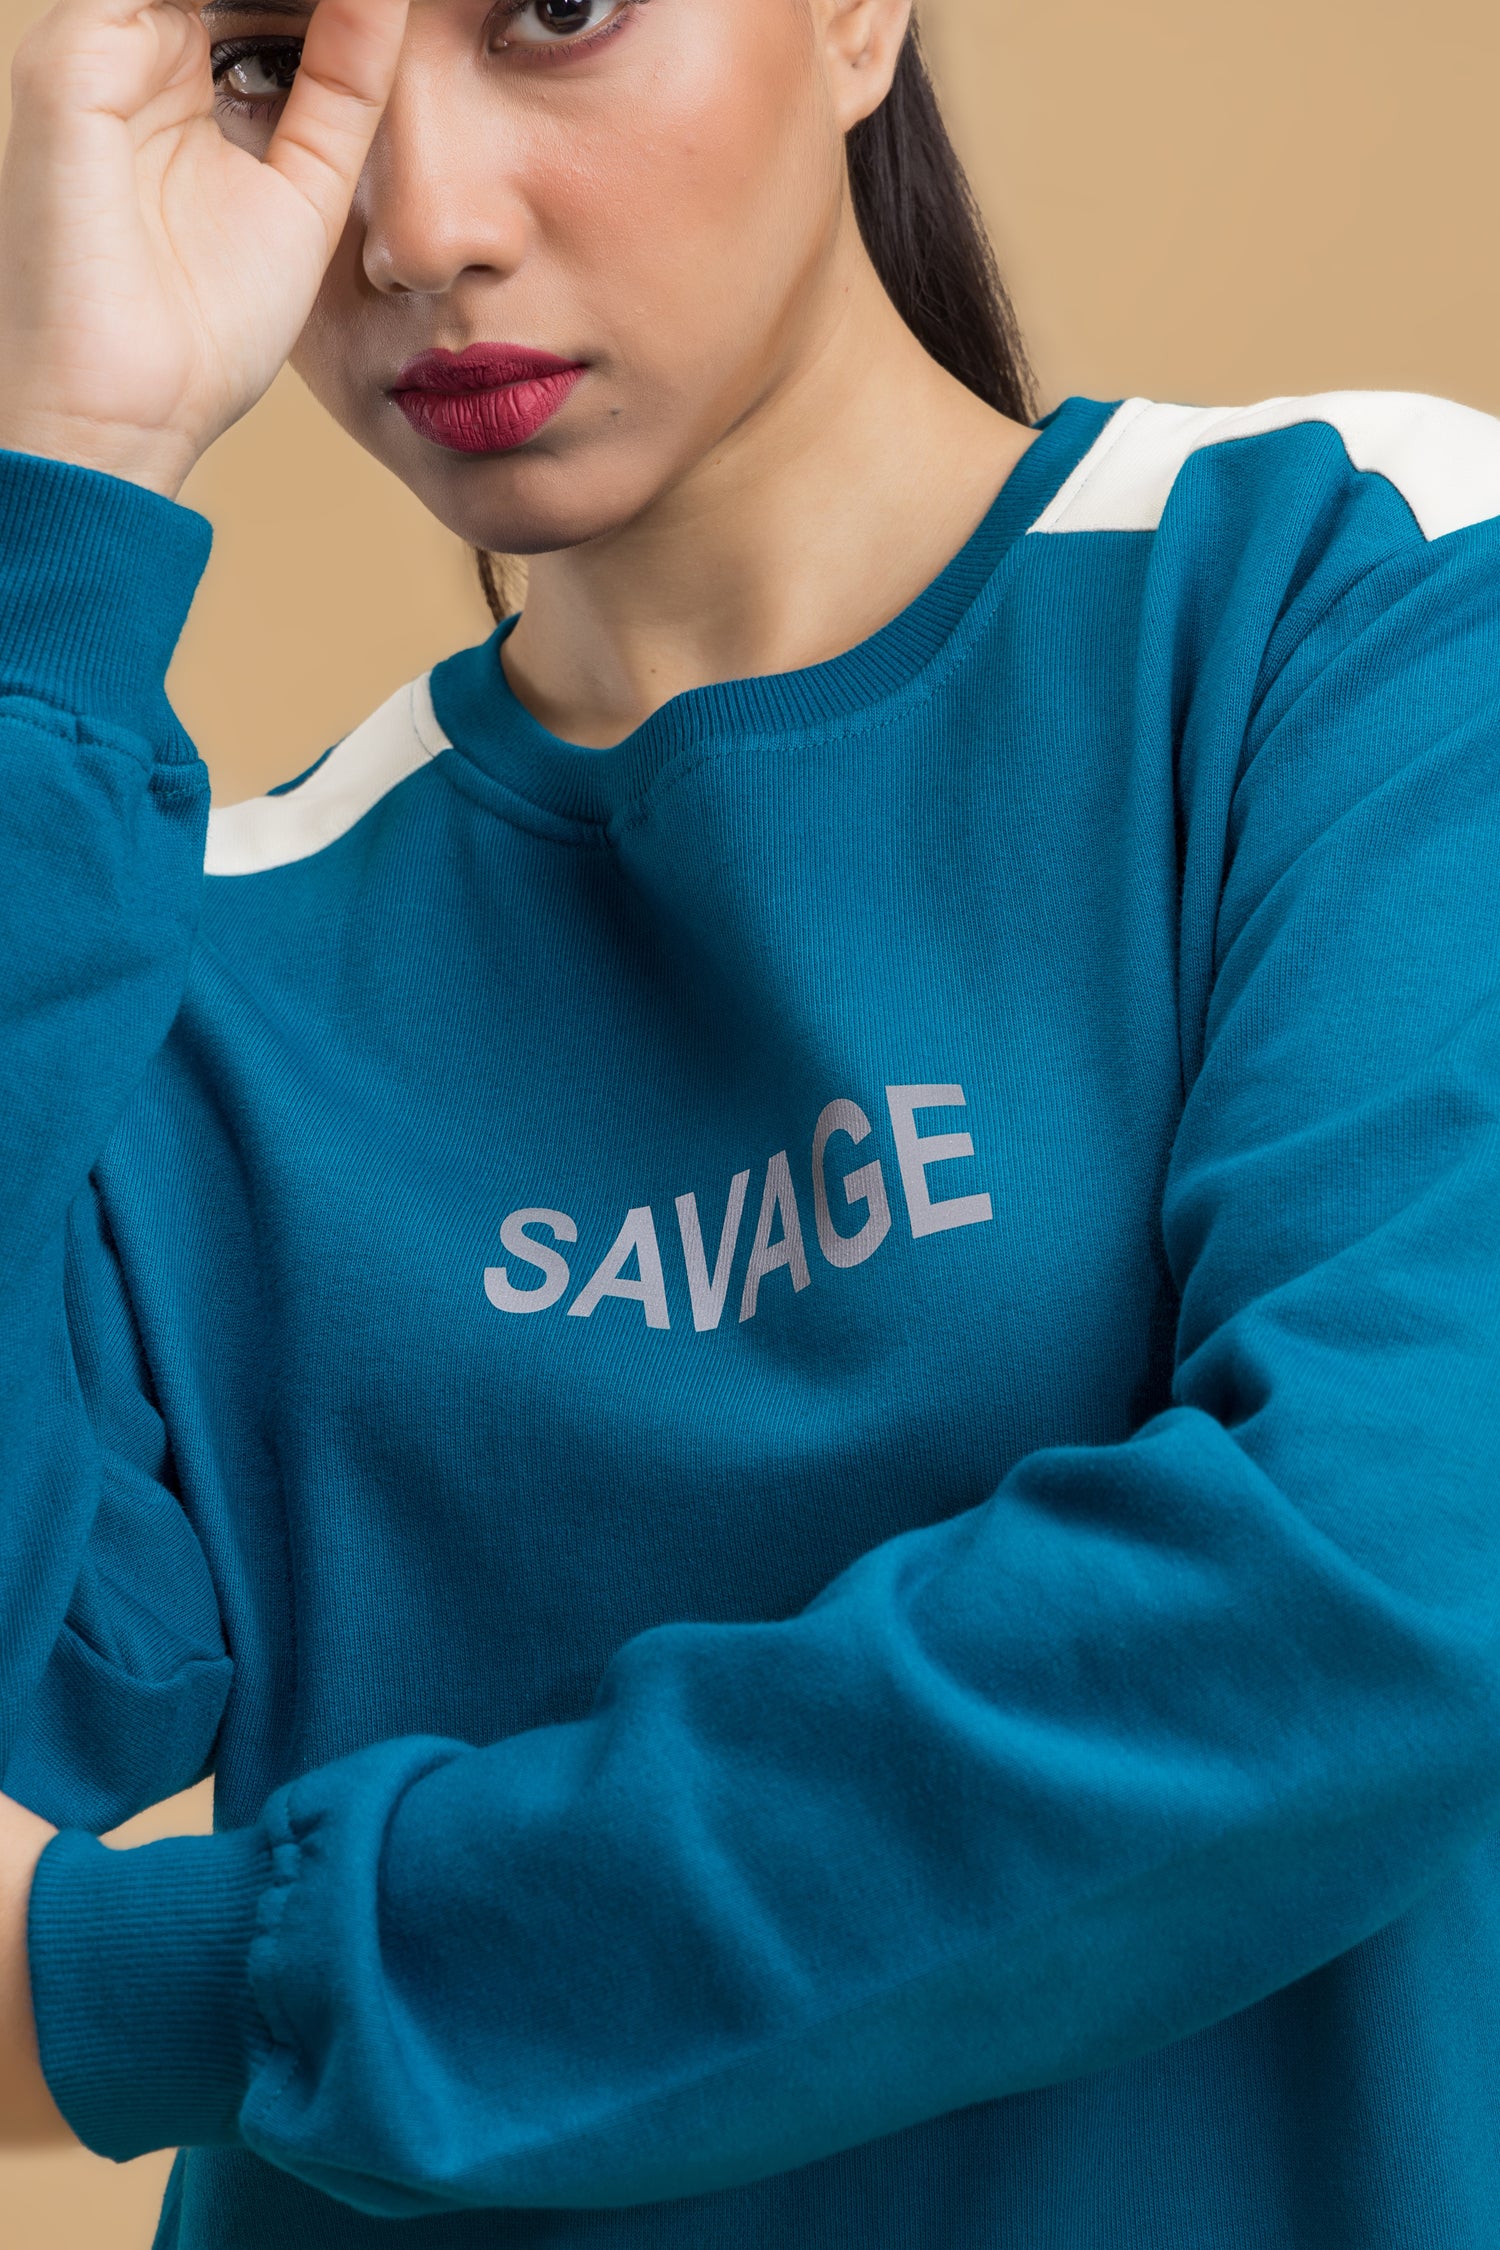 Savage Teal Printed Full Sleeves Unisex Sweatshirt